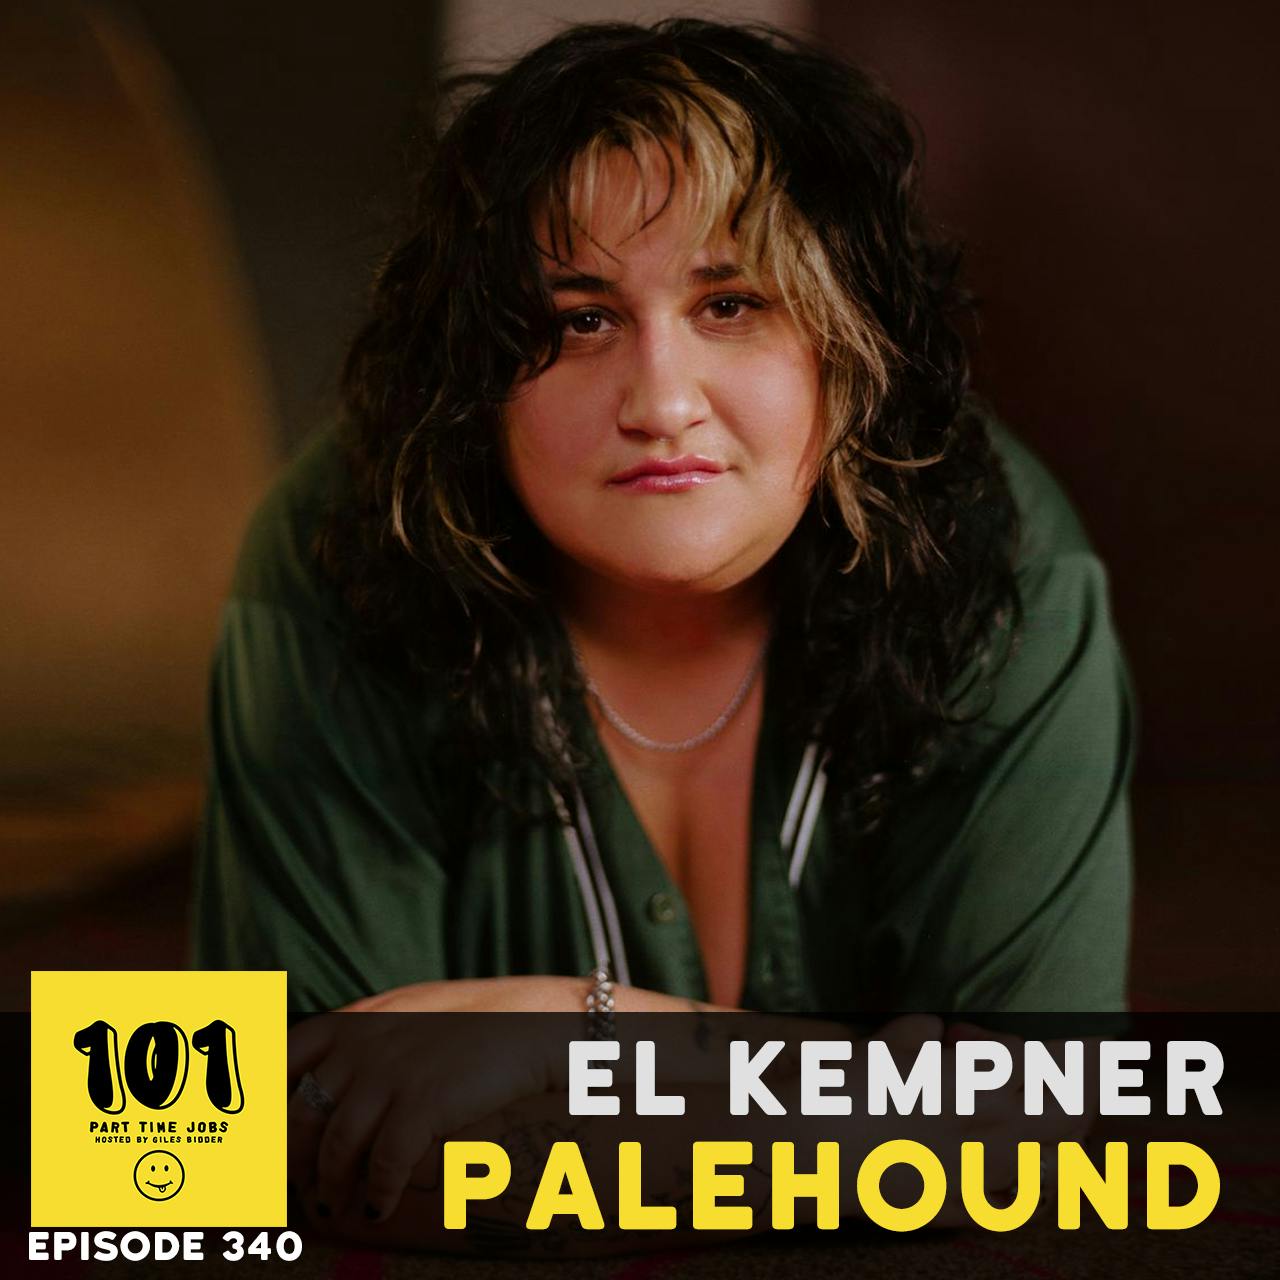 El Kempner (Palehound) - Shredding the acoustic